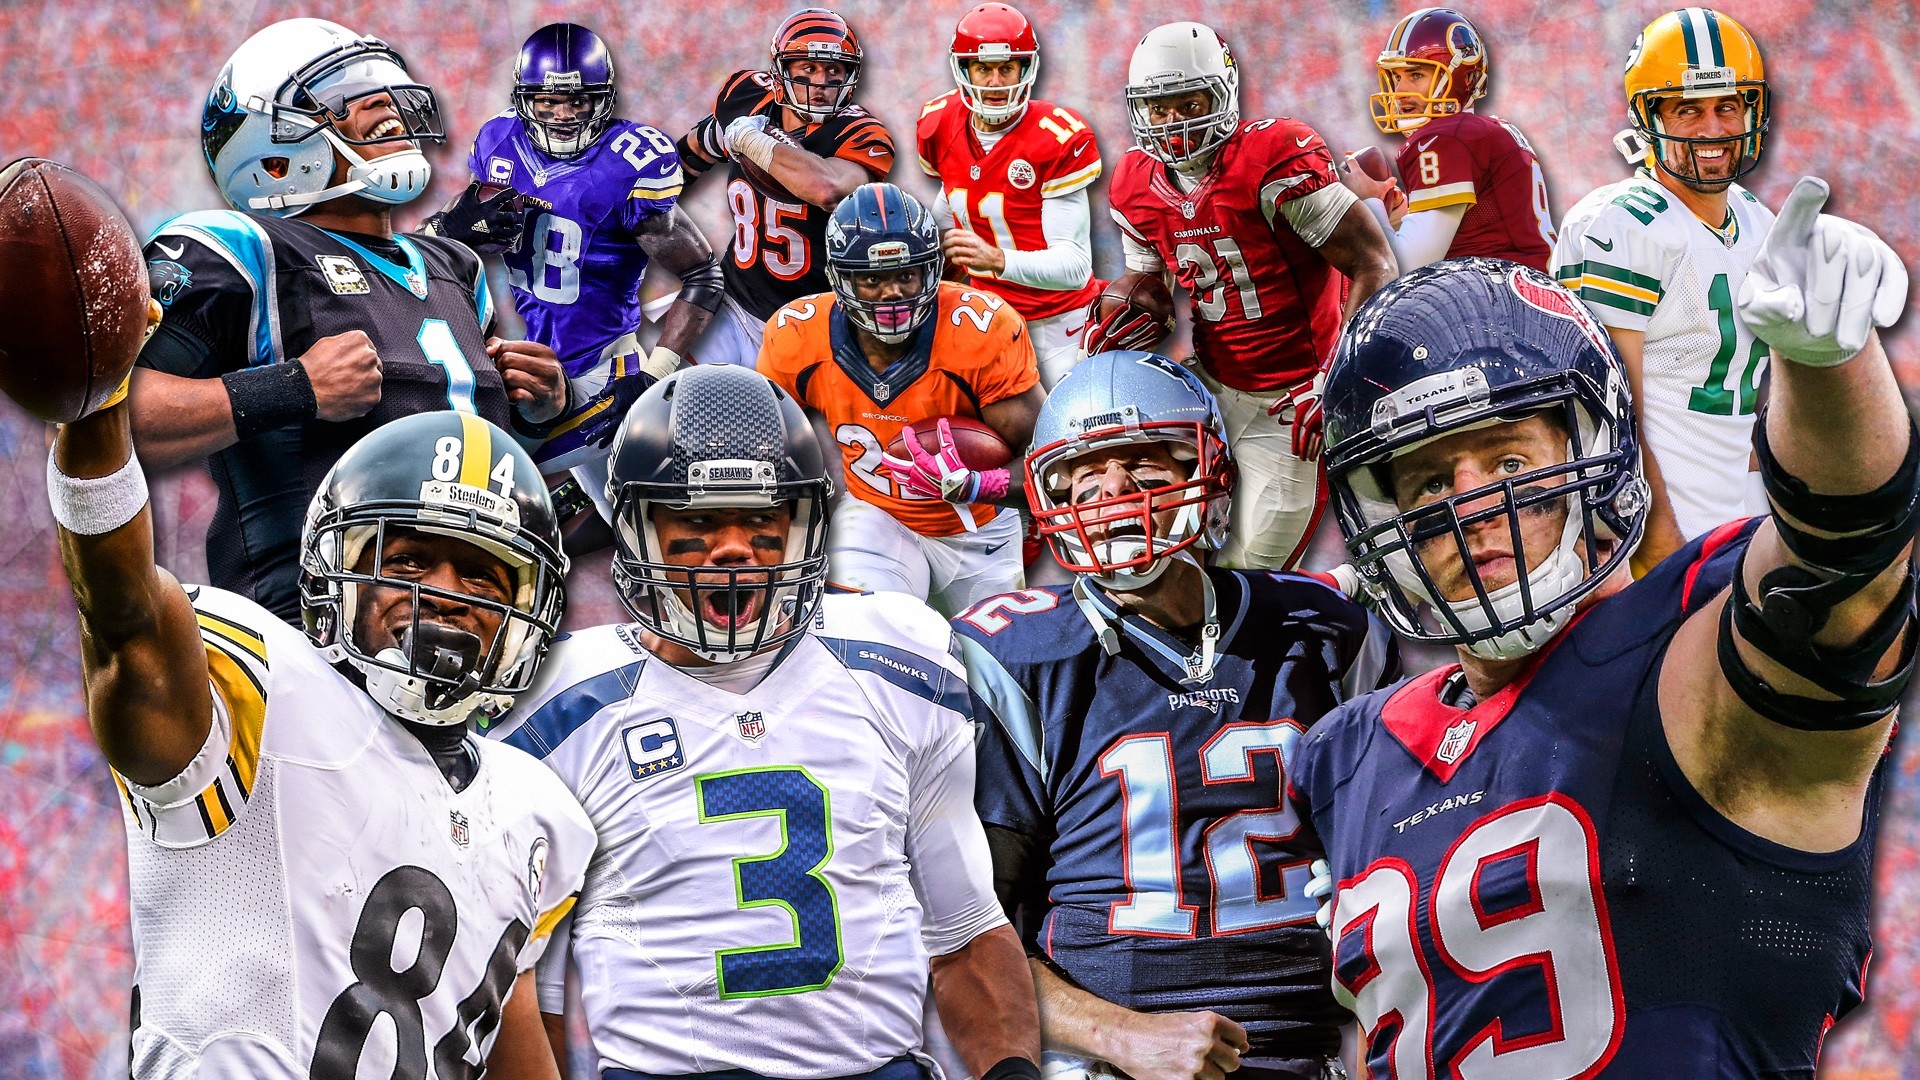 NFL Teams Wallpaper 2018 (89+ images)